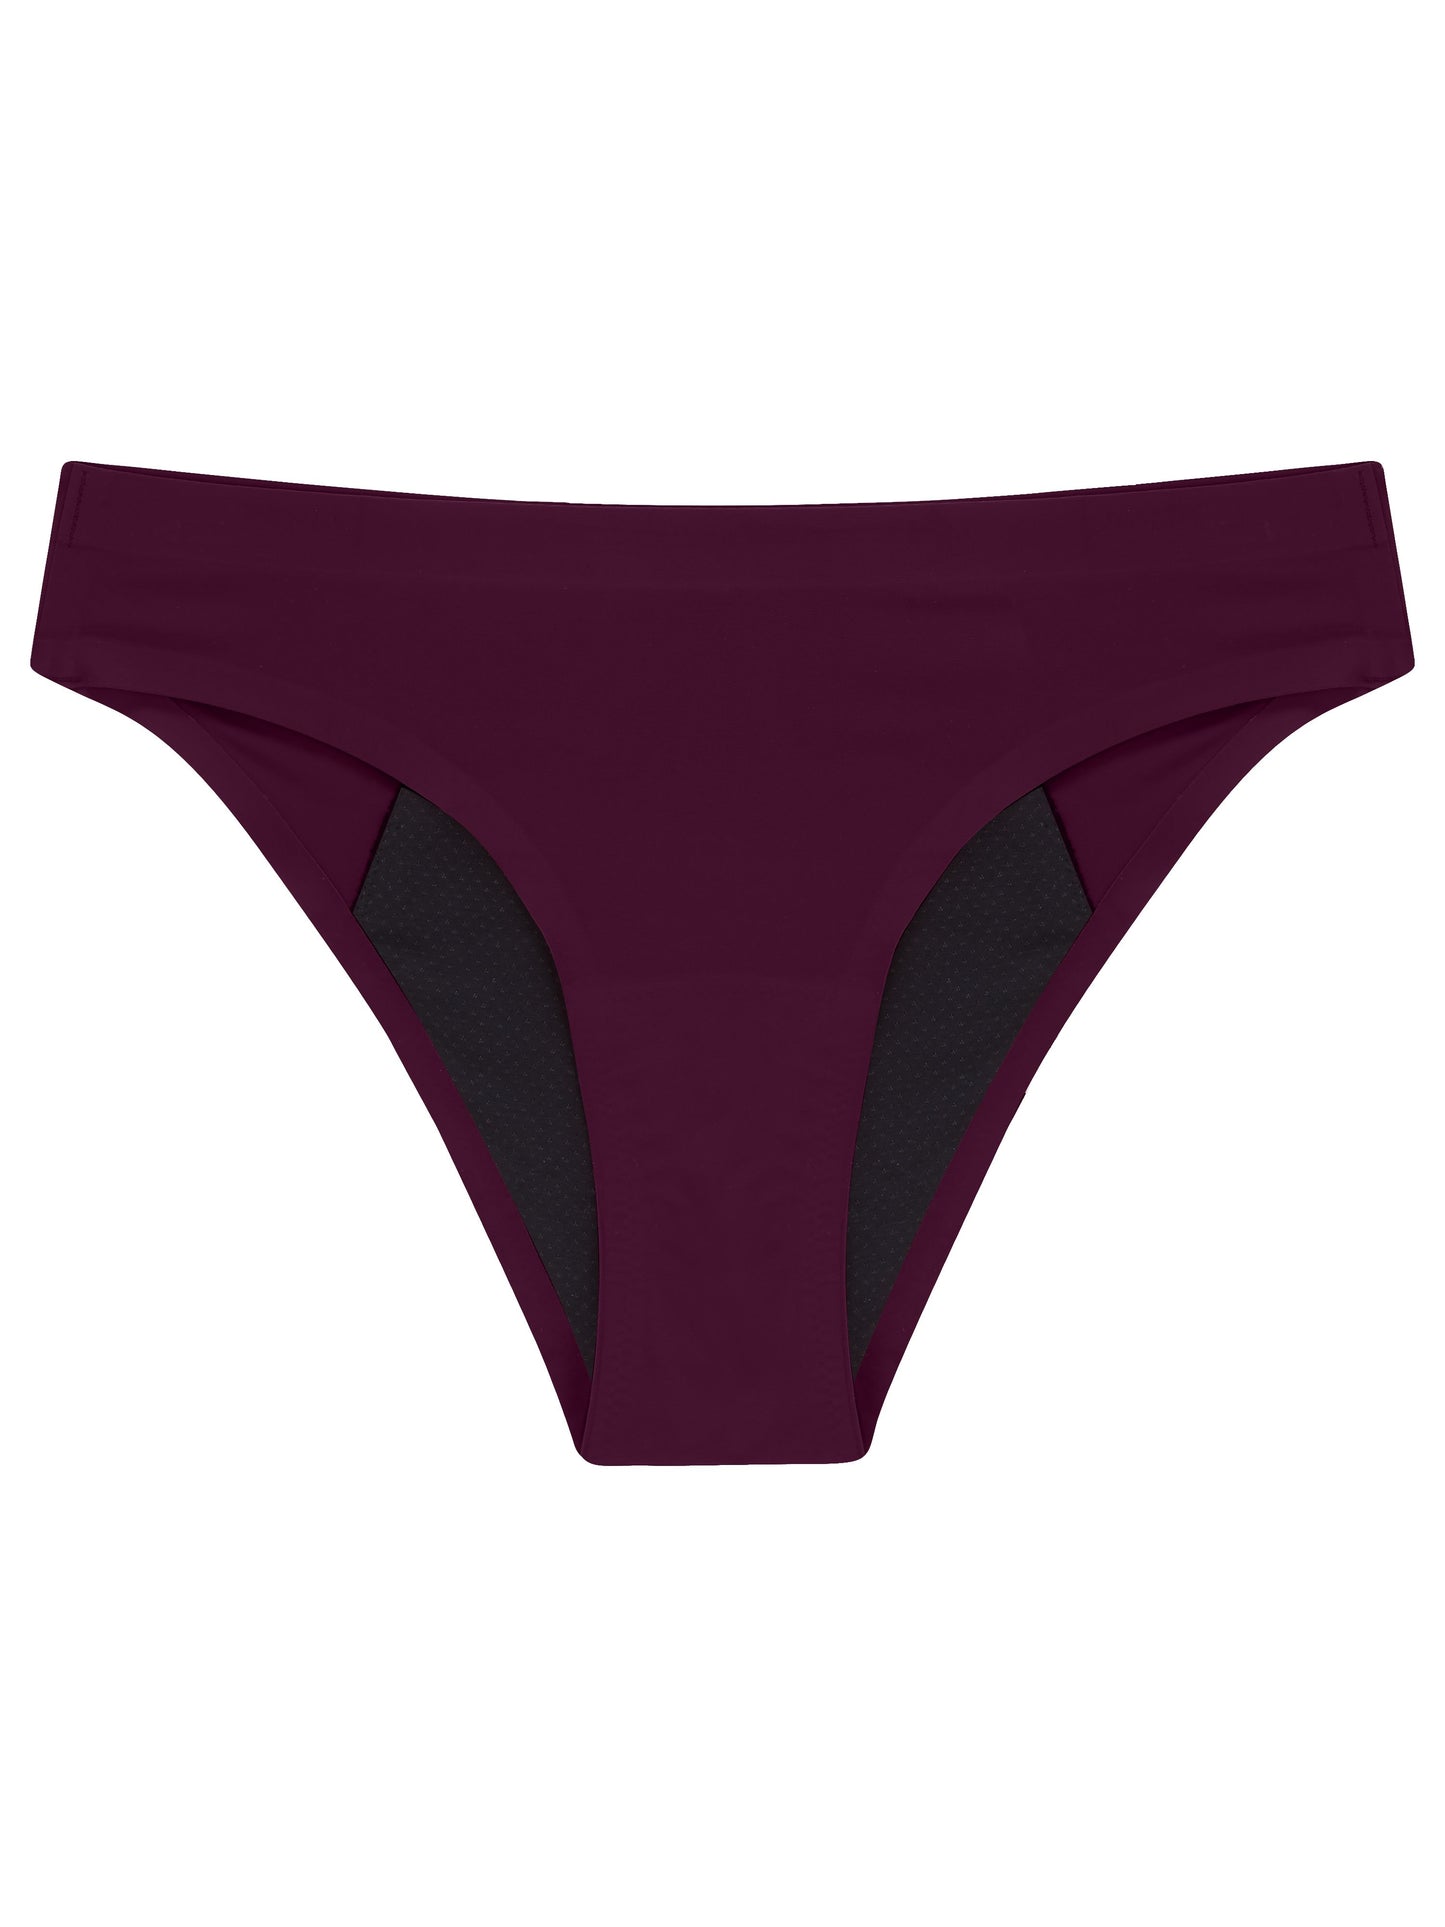 Imaara Feminine Period Underwear Inclusive Knickers. Product Jamuna Mulberry